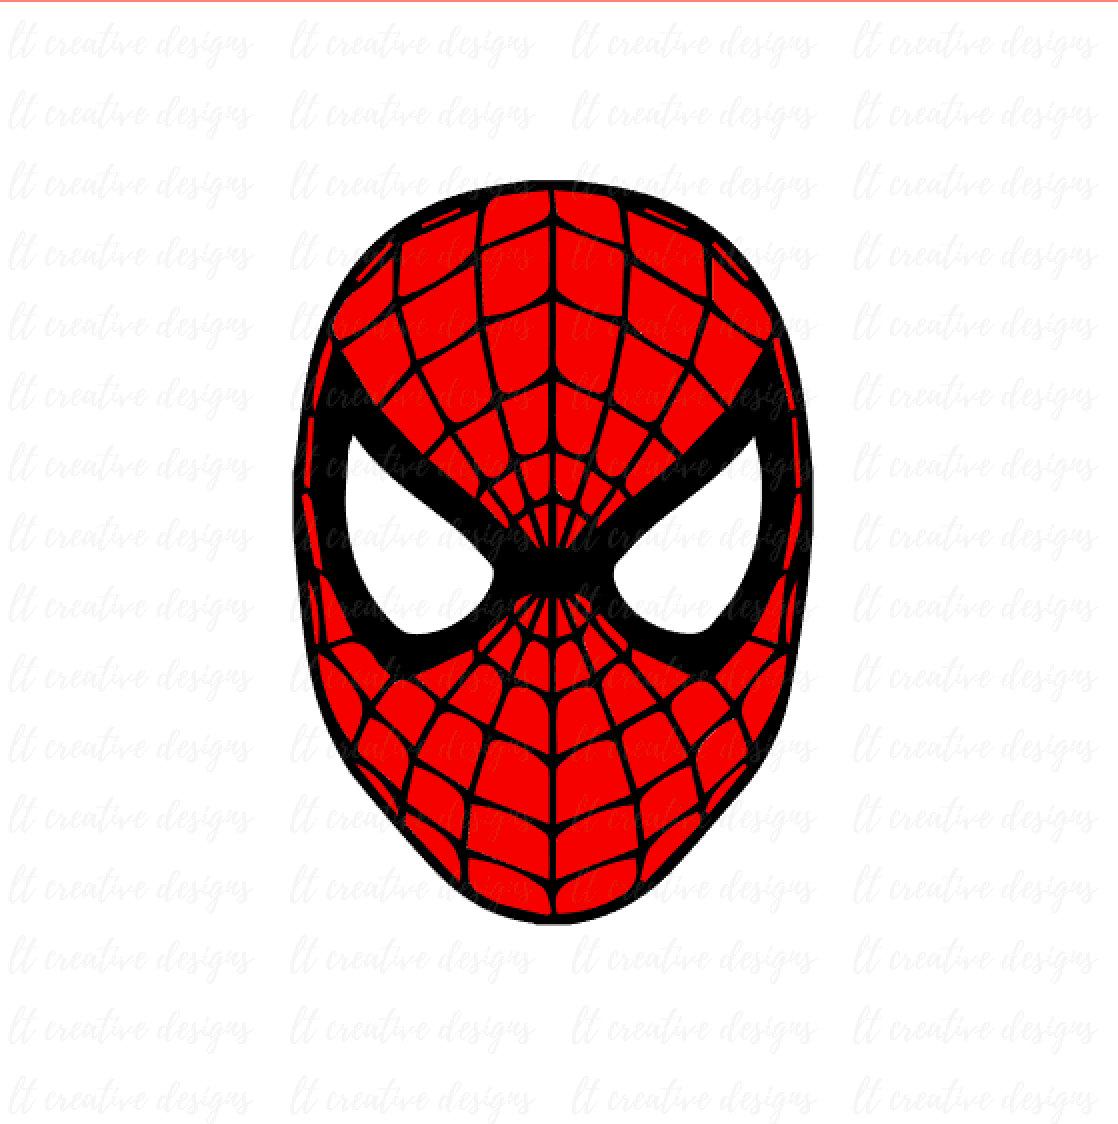 Spiderman Clip Art; Spiderman